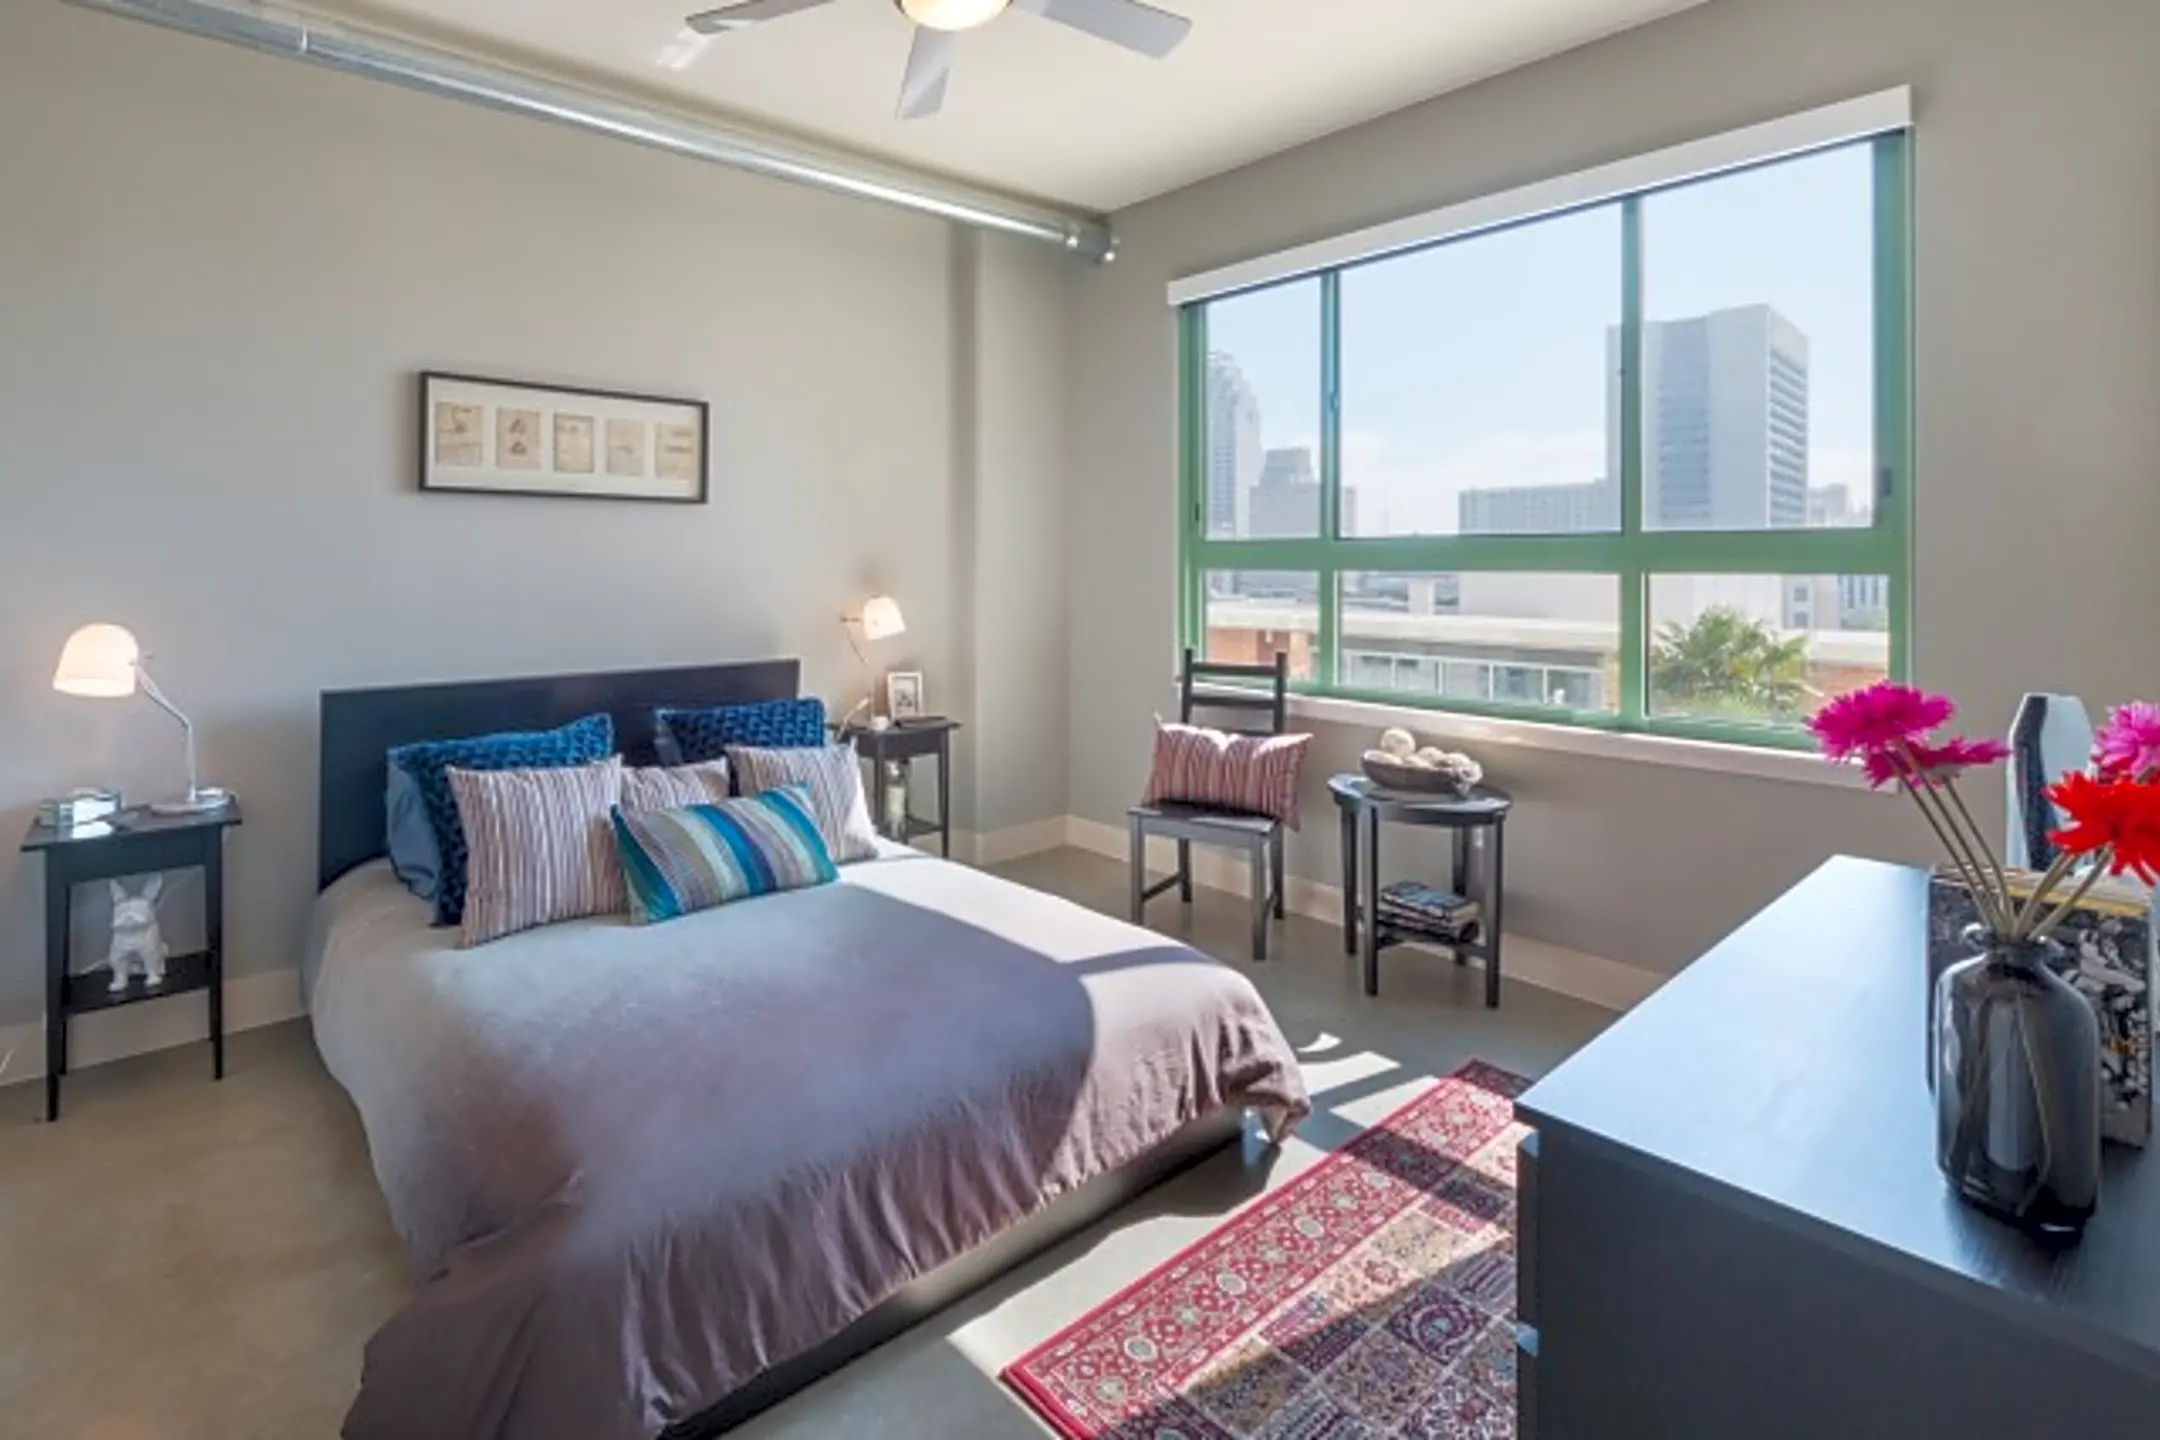 Bedroom - 78215 Luxury Properties - San Antonio, TX